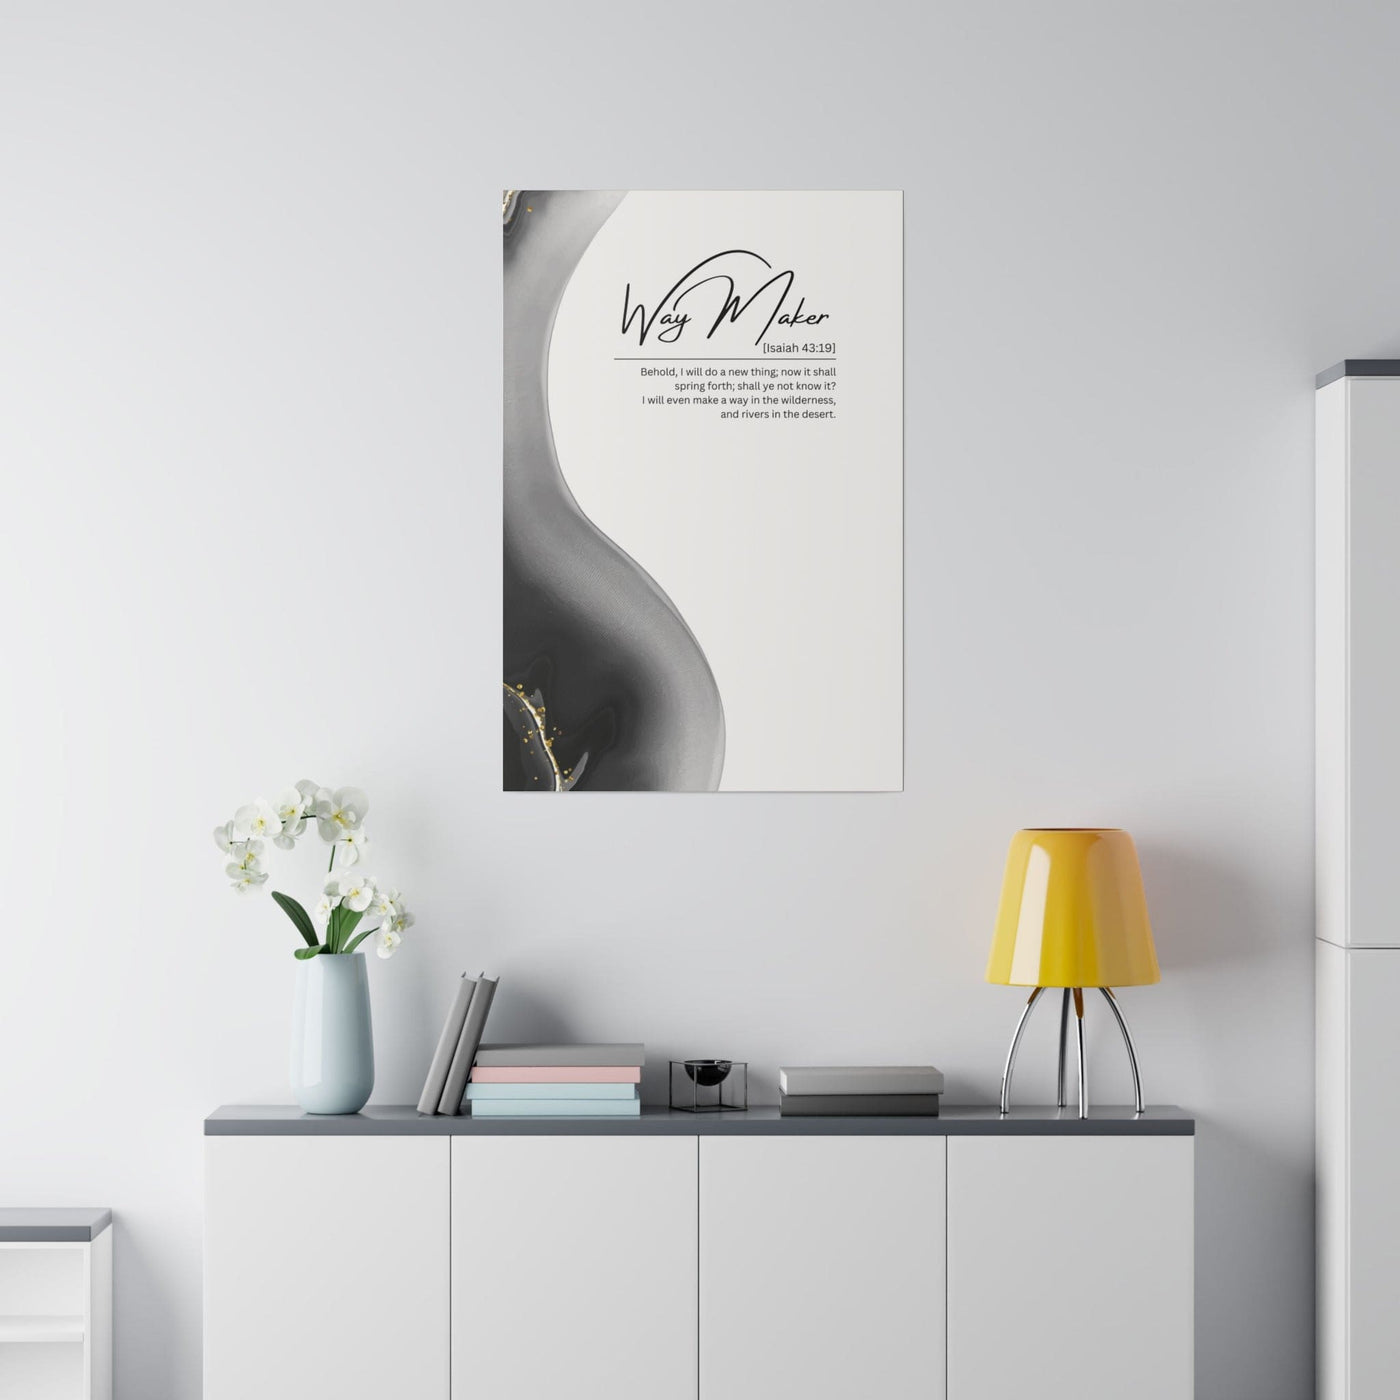 Wall Art Poster Print for Living Room Office Decor Bedroom Artwork Way Maker